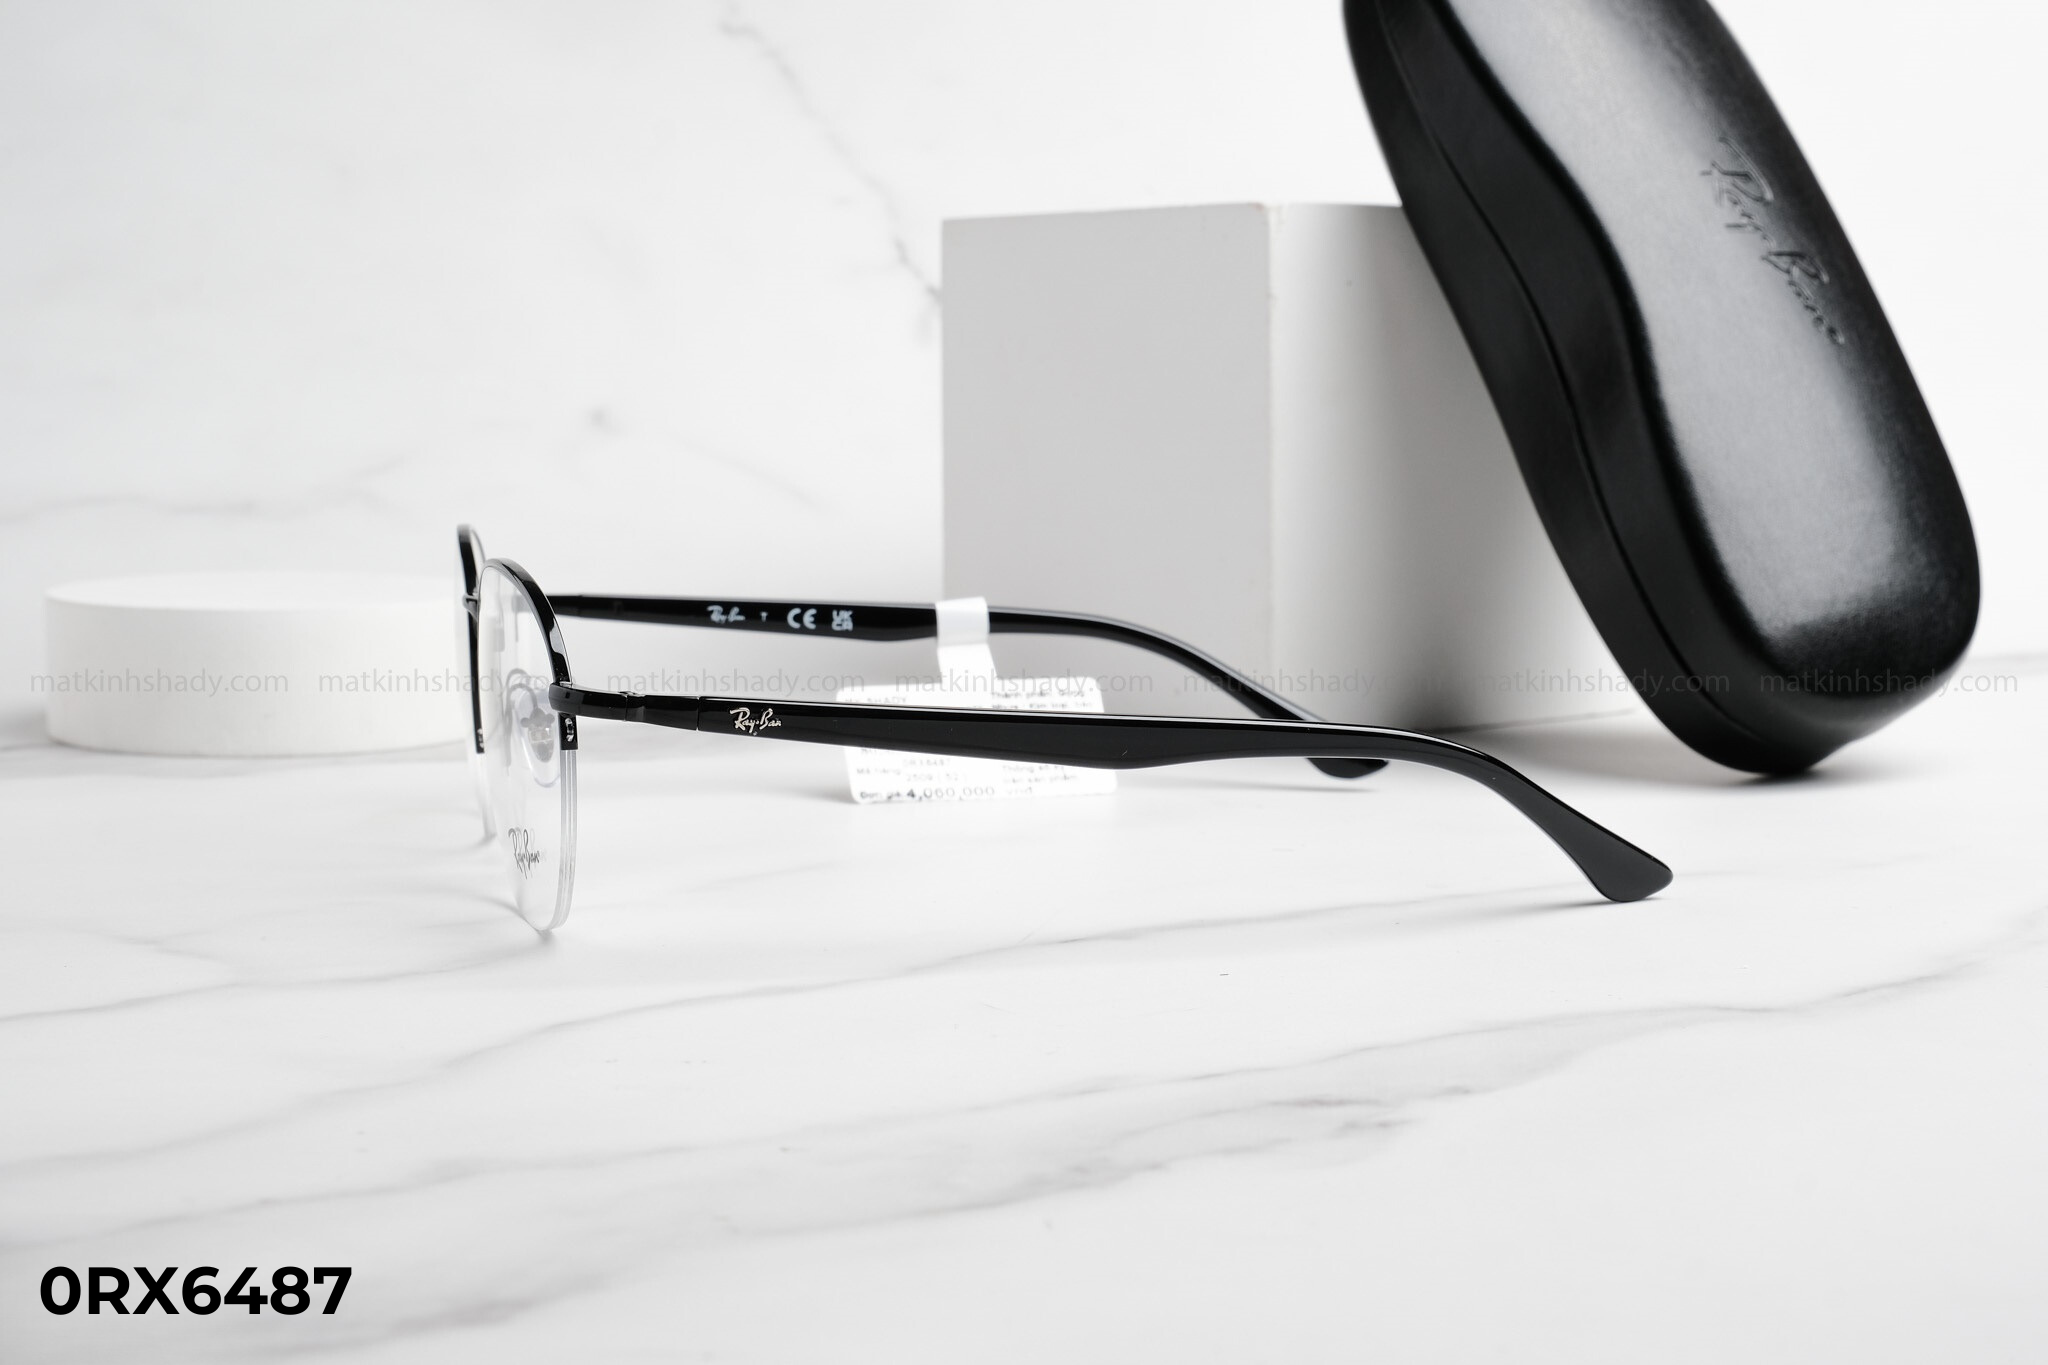  Rayban Eyewear - Glasses - 0RX6487 